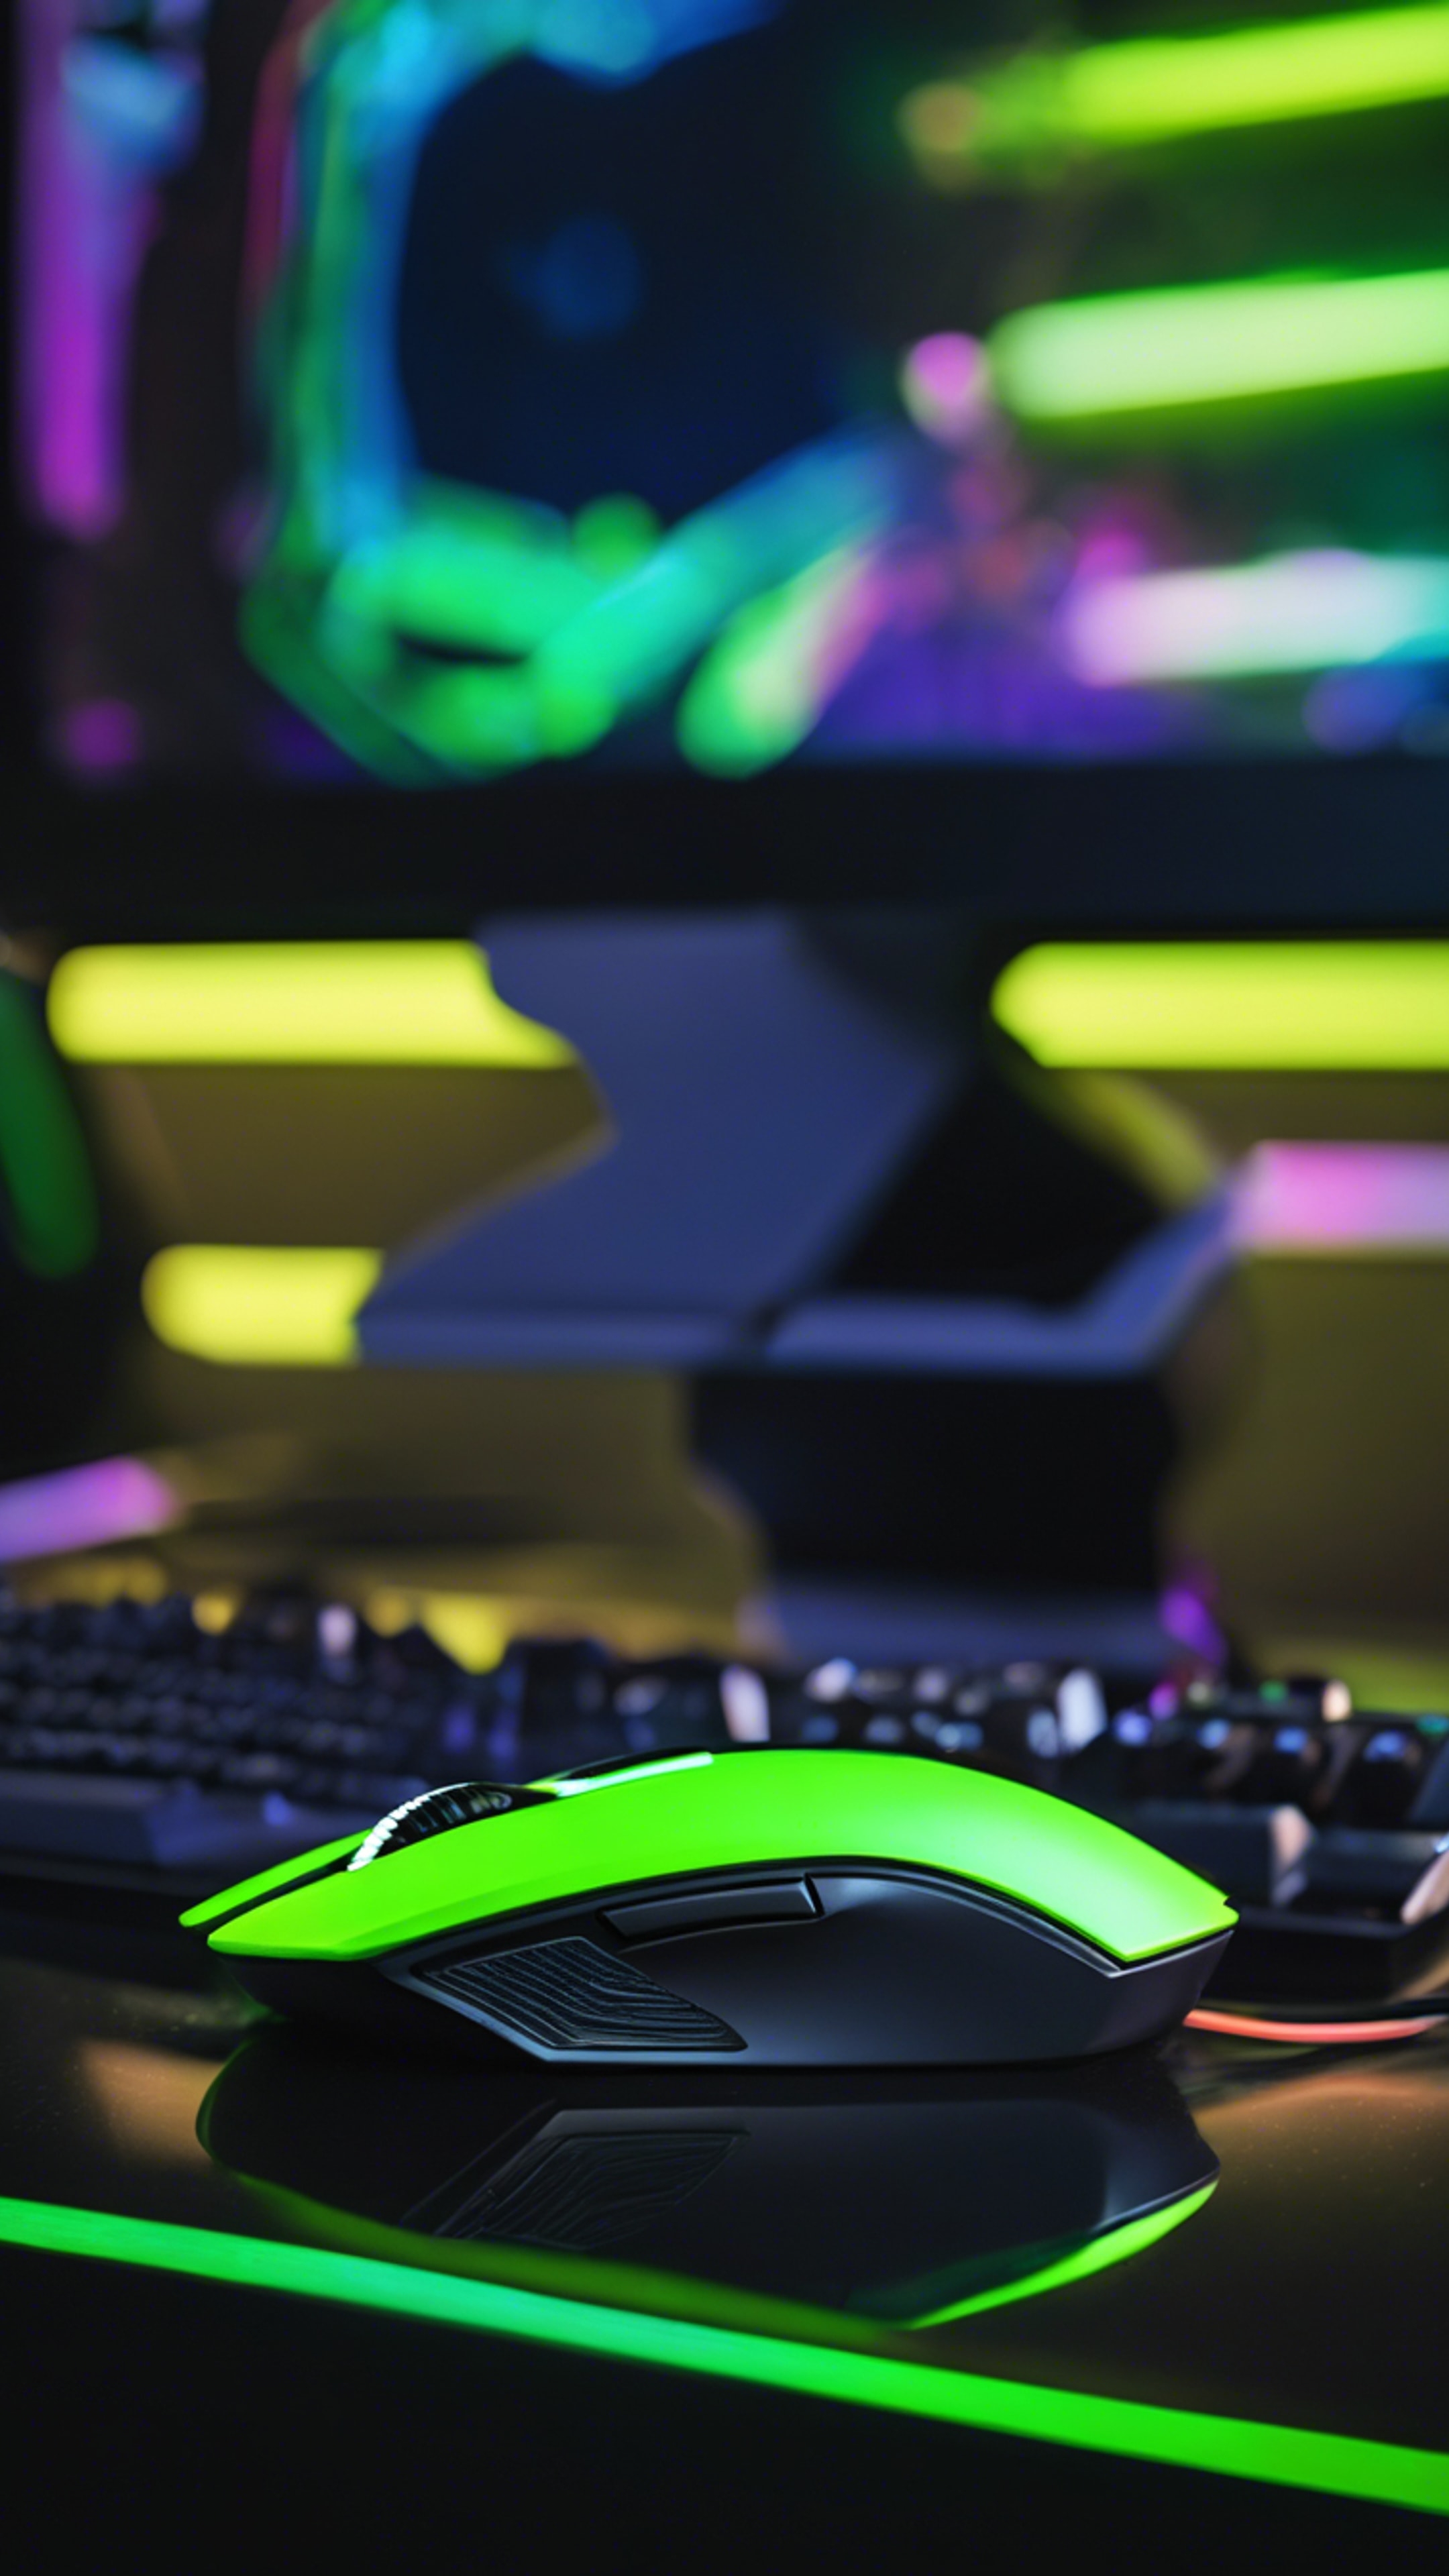 A cool neon green high-tech gaming mouse on a futuristic black desk setup. Behang[6d2a2b9049aa4c81a995]